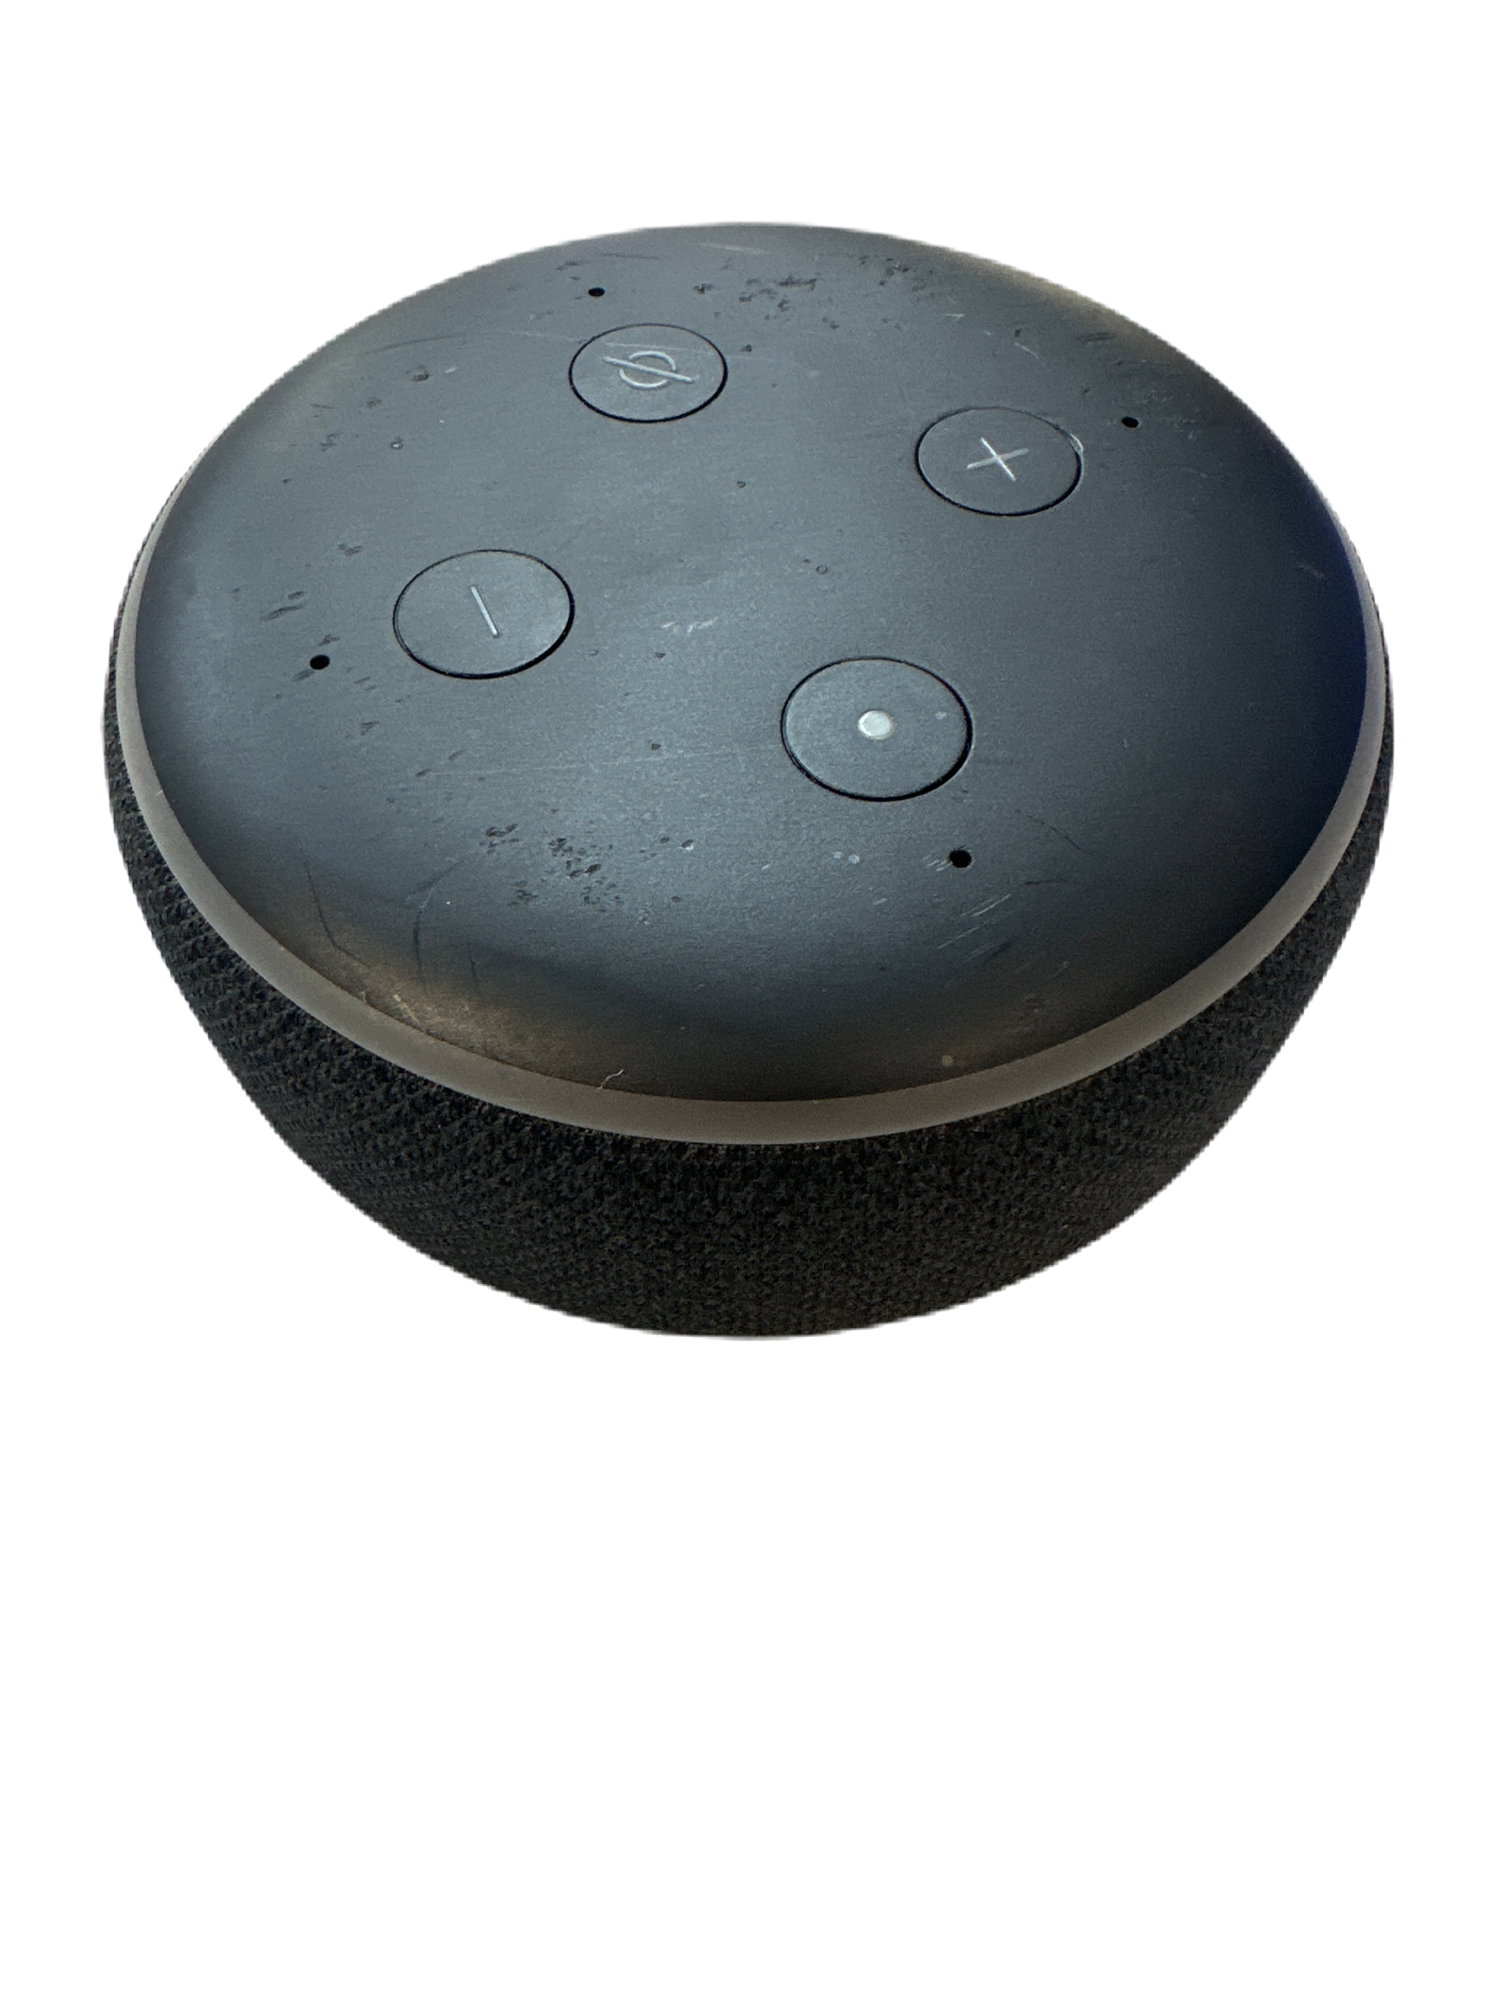 Echo Dot 3  - Unboxed Smart Speaker